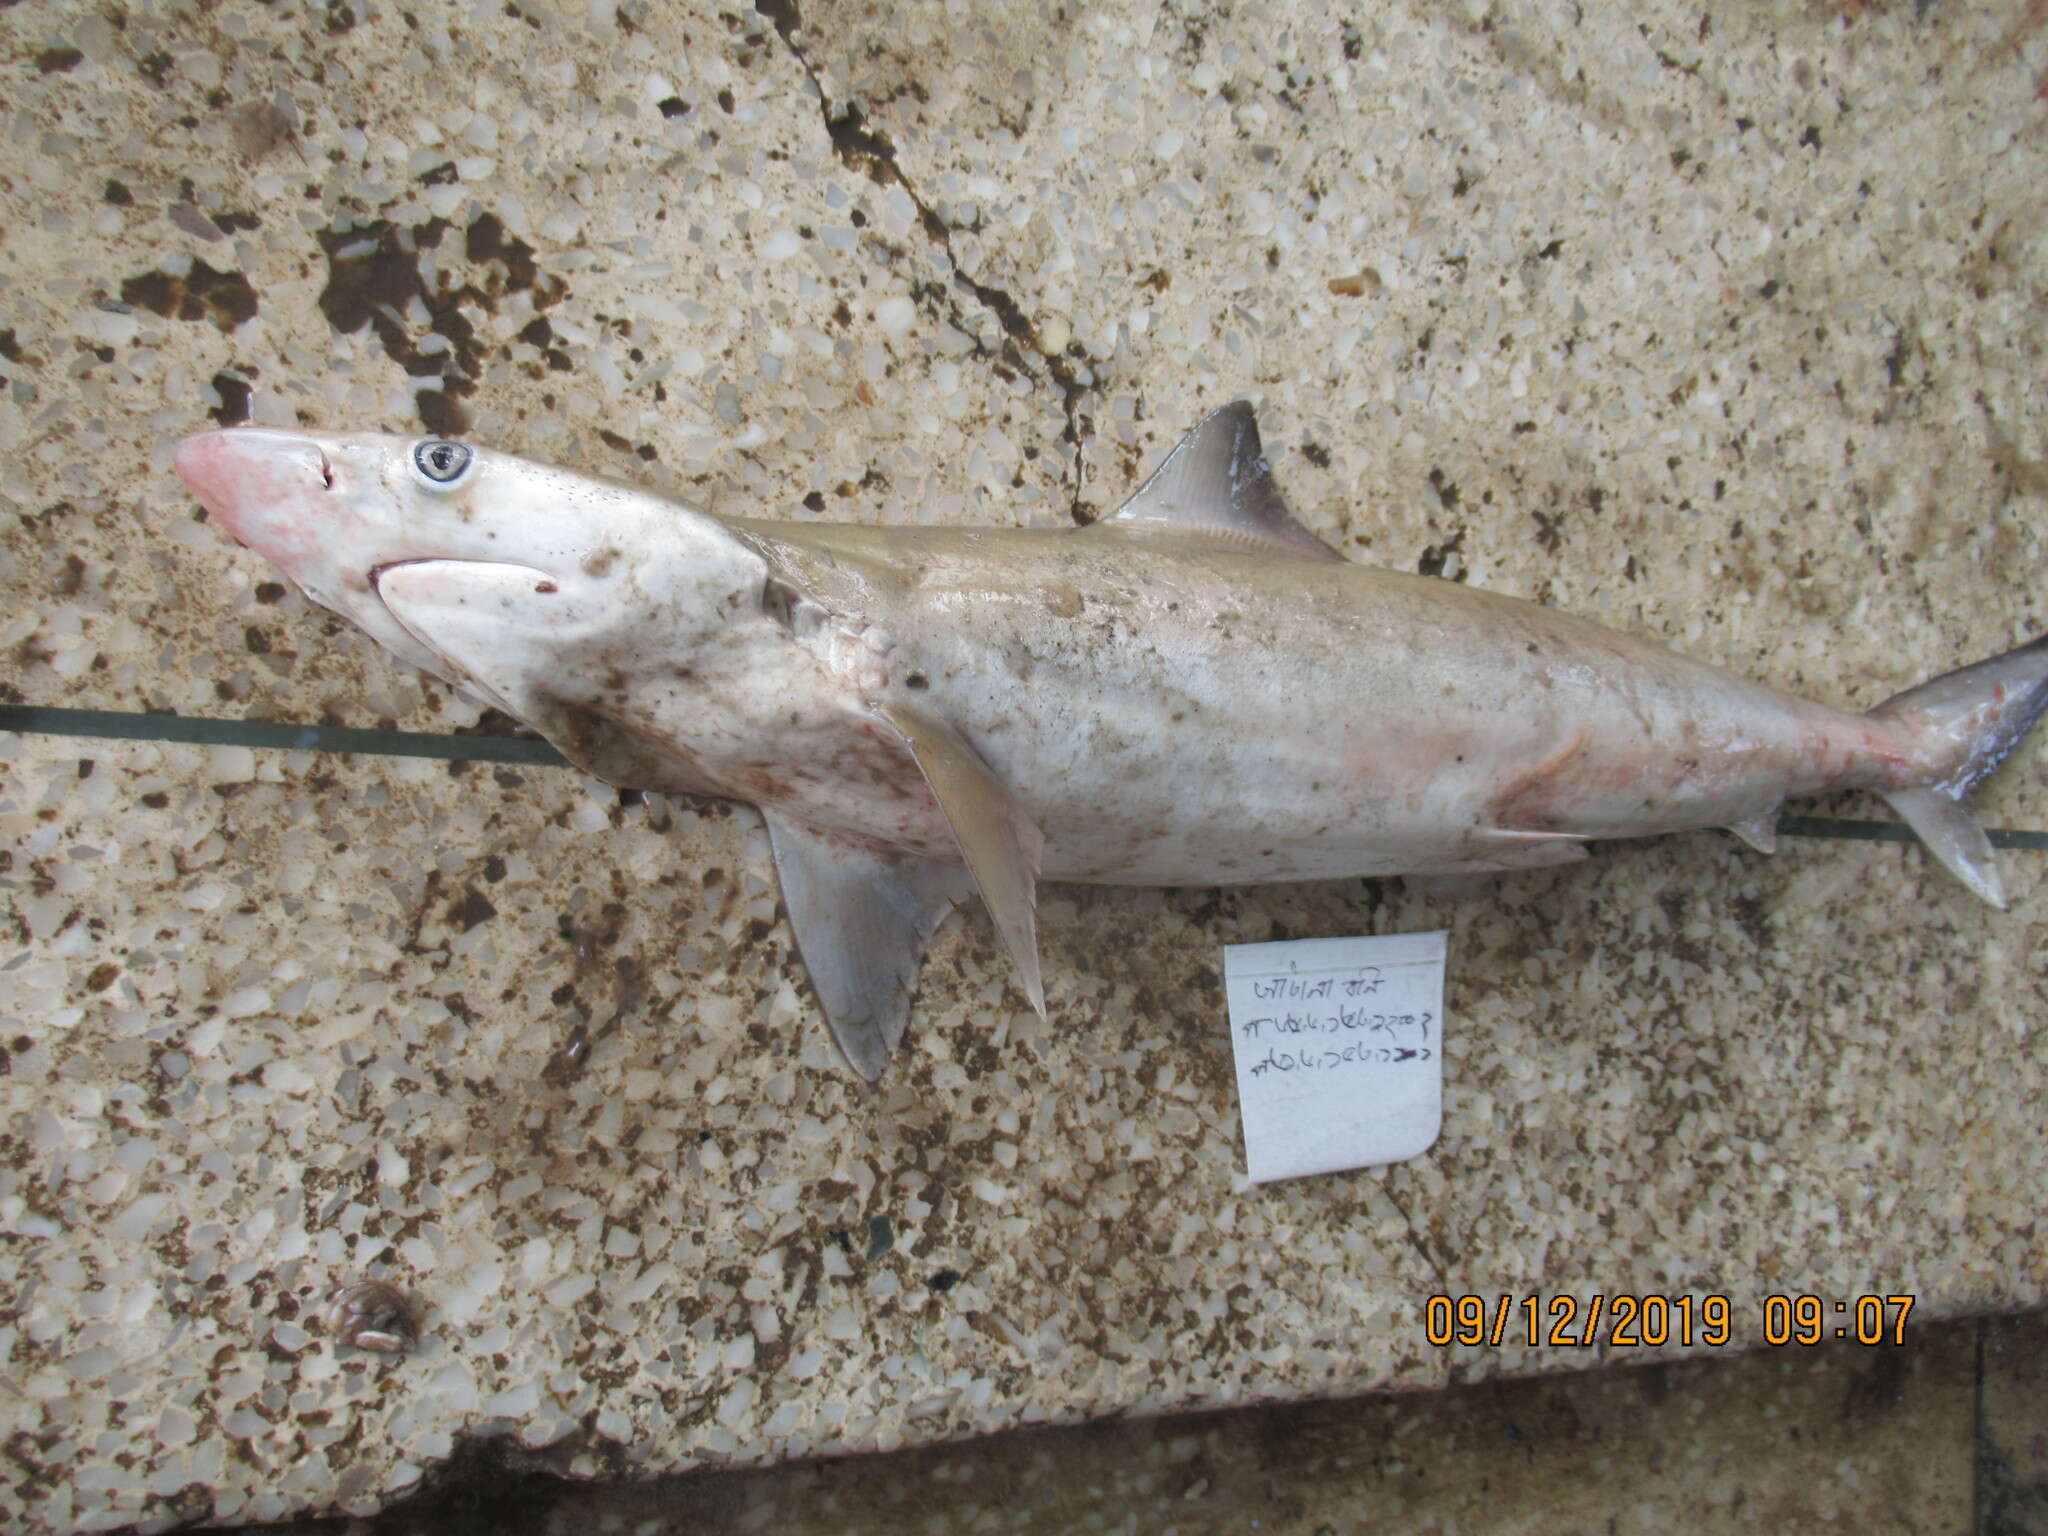 Image of Grey Sharpnose Shark